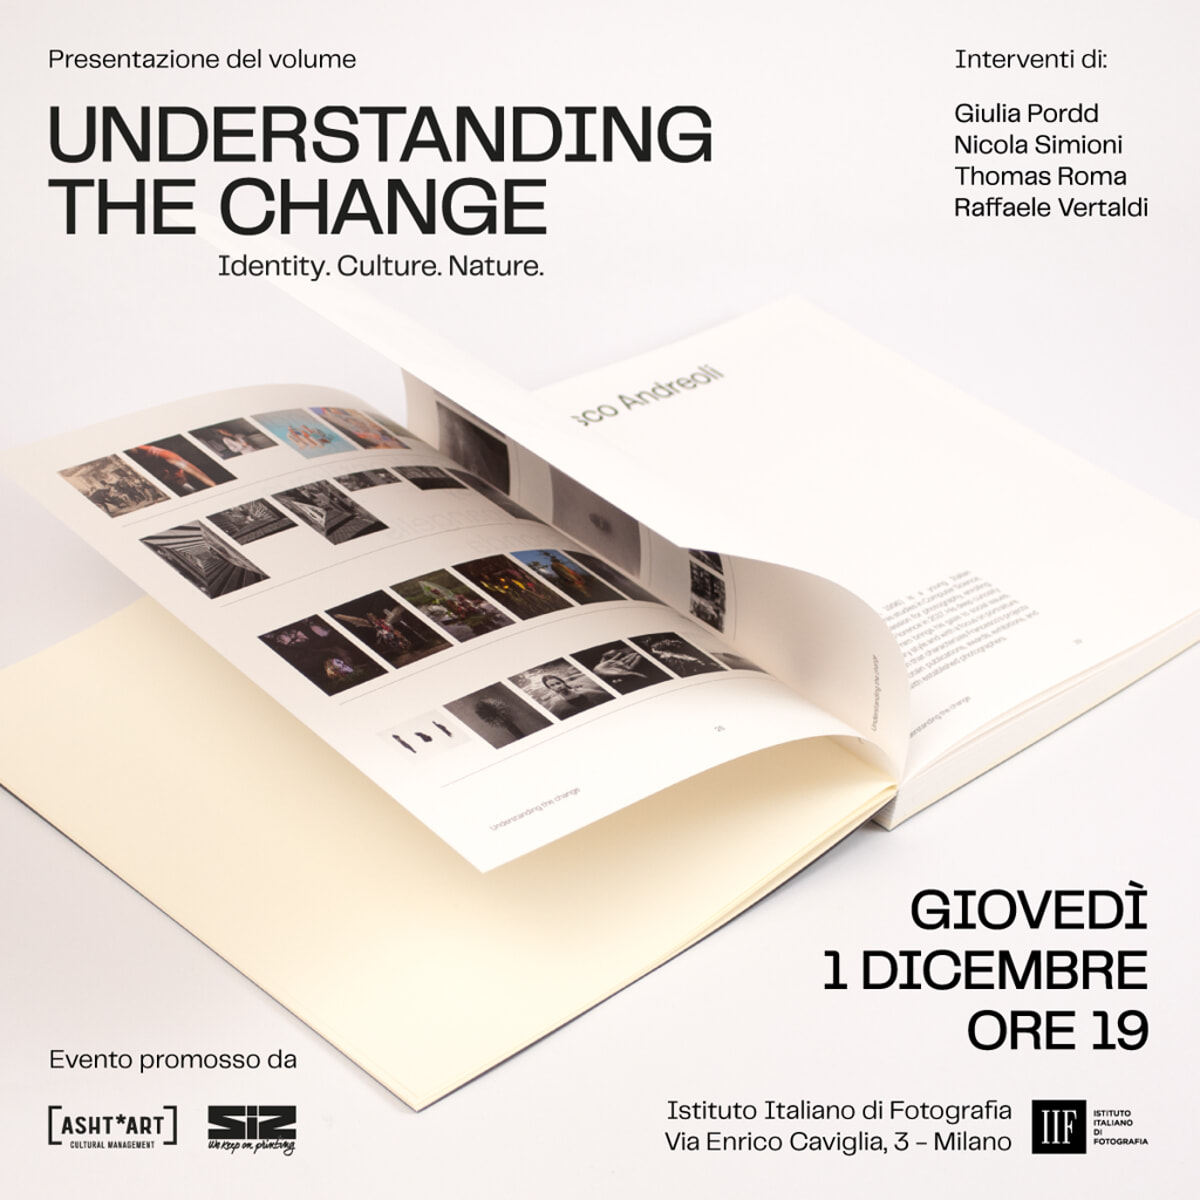 IIf ospita la presentazione del volume “understanding the change”